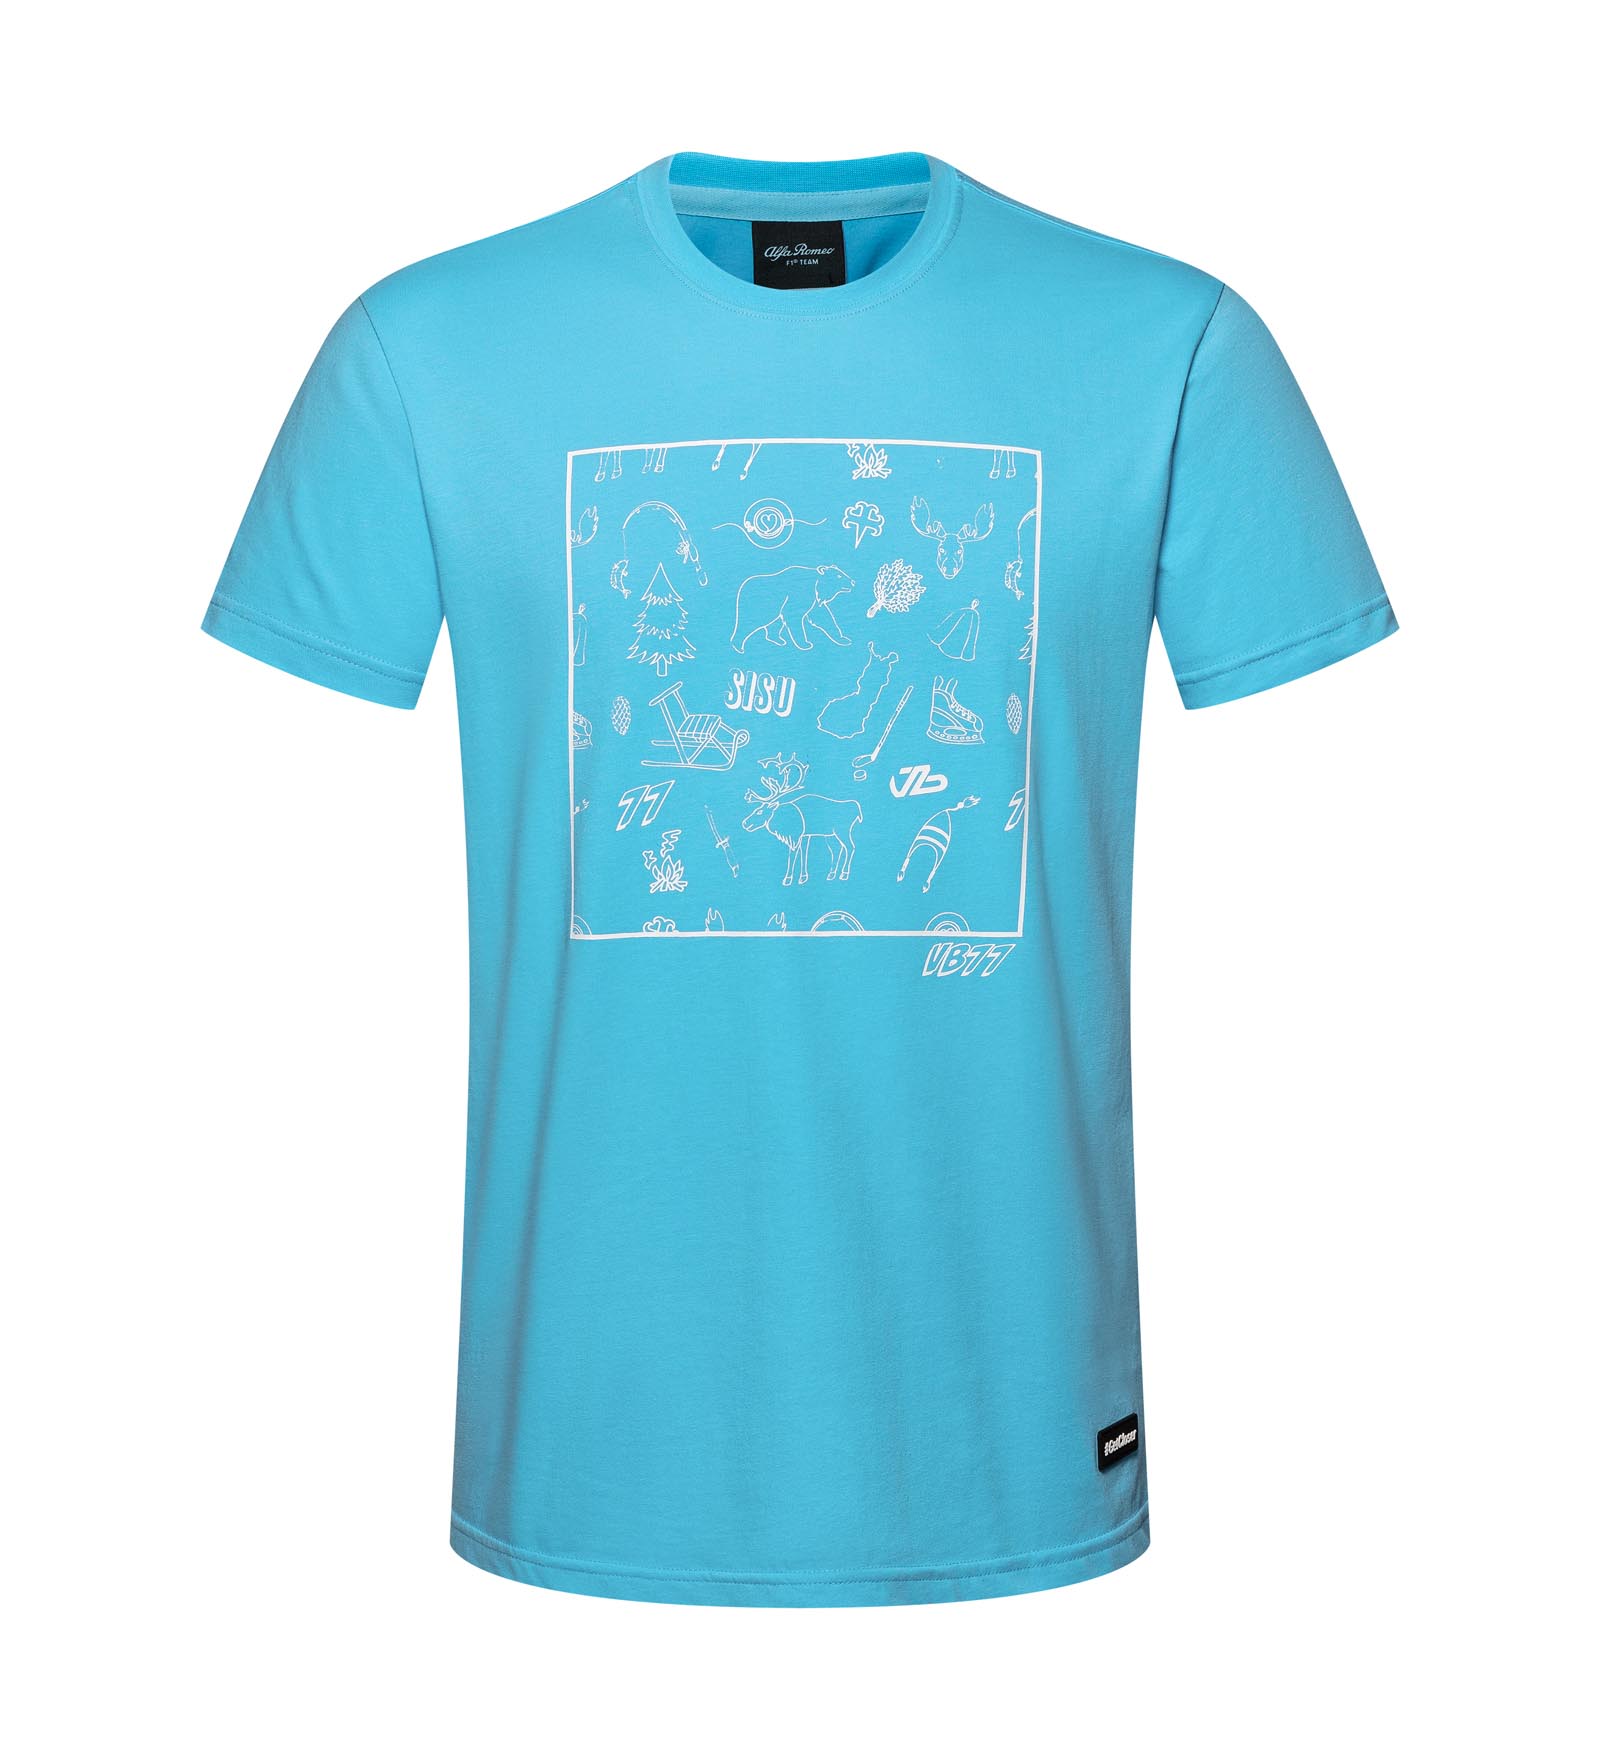 T-Shirt #TeamBottas Blau XL Valtteri Bottas